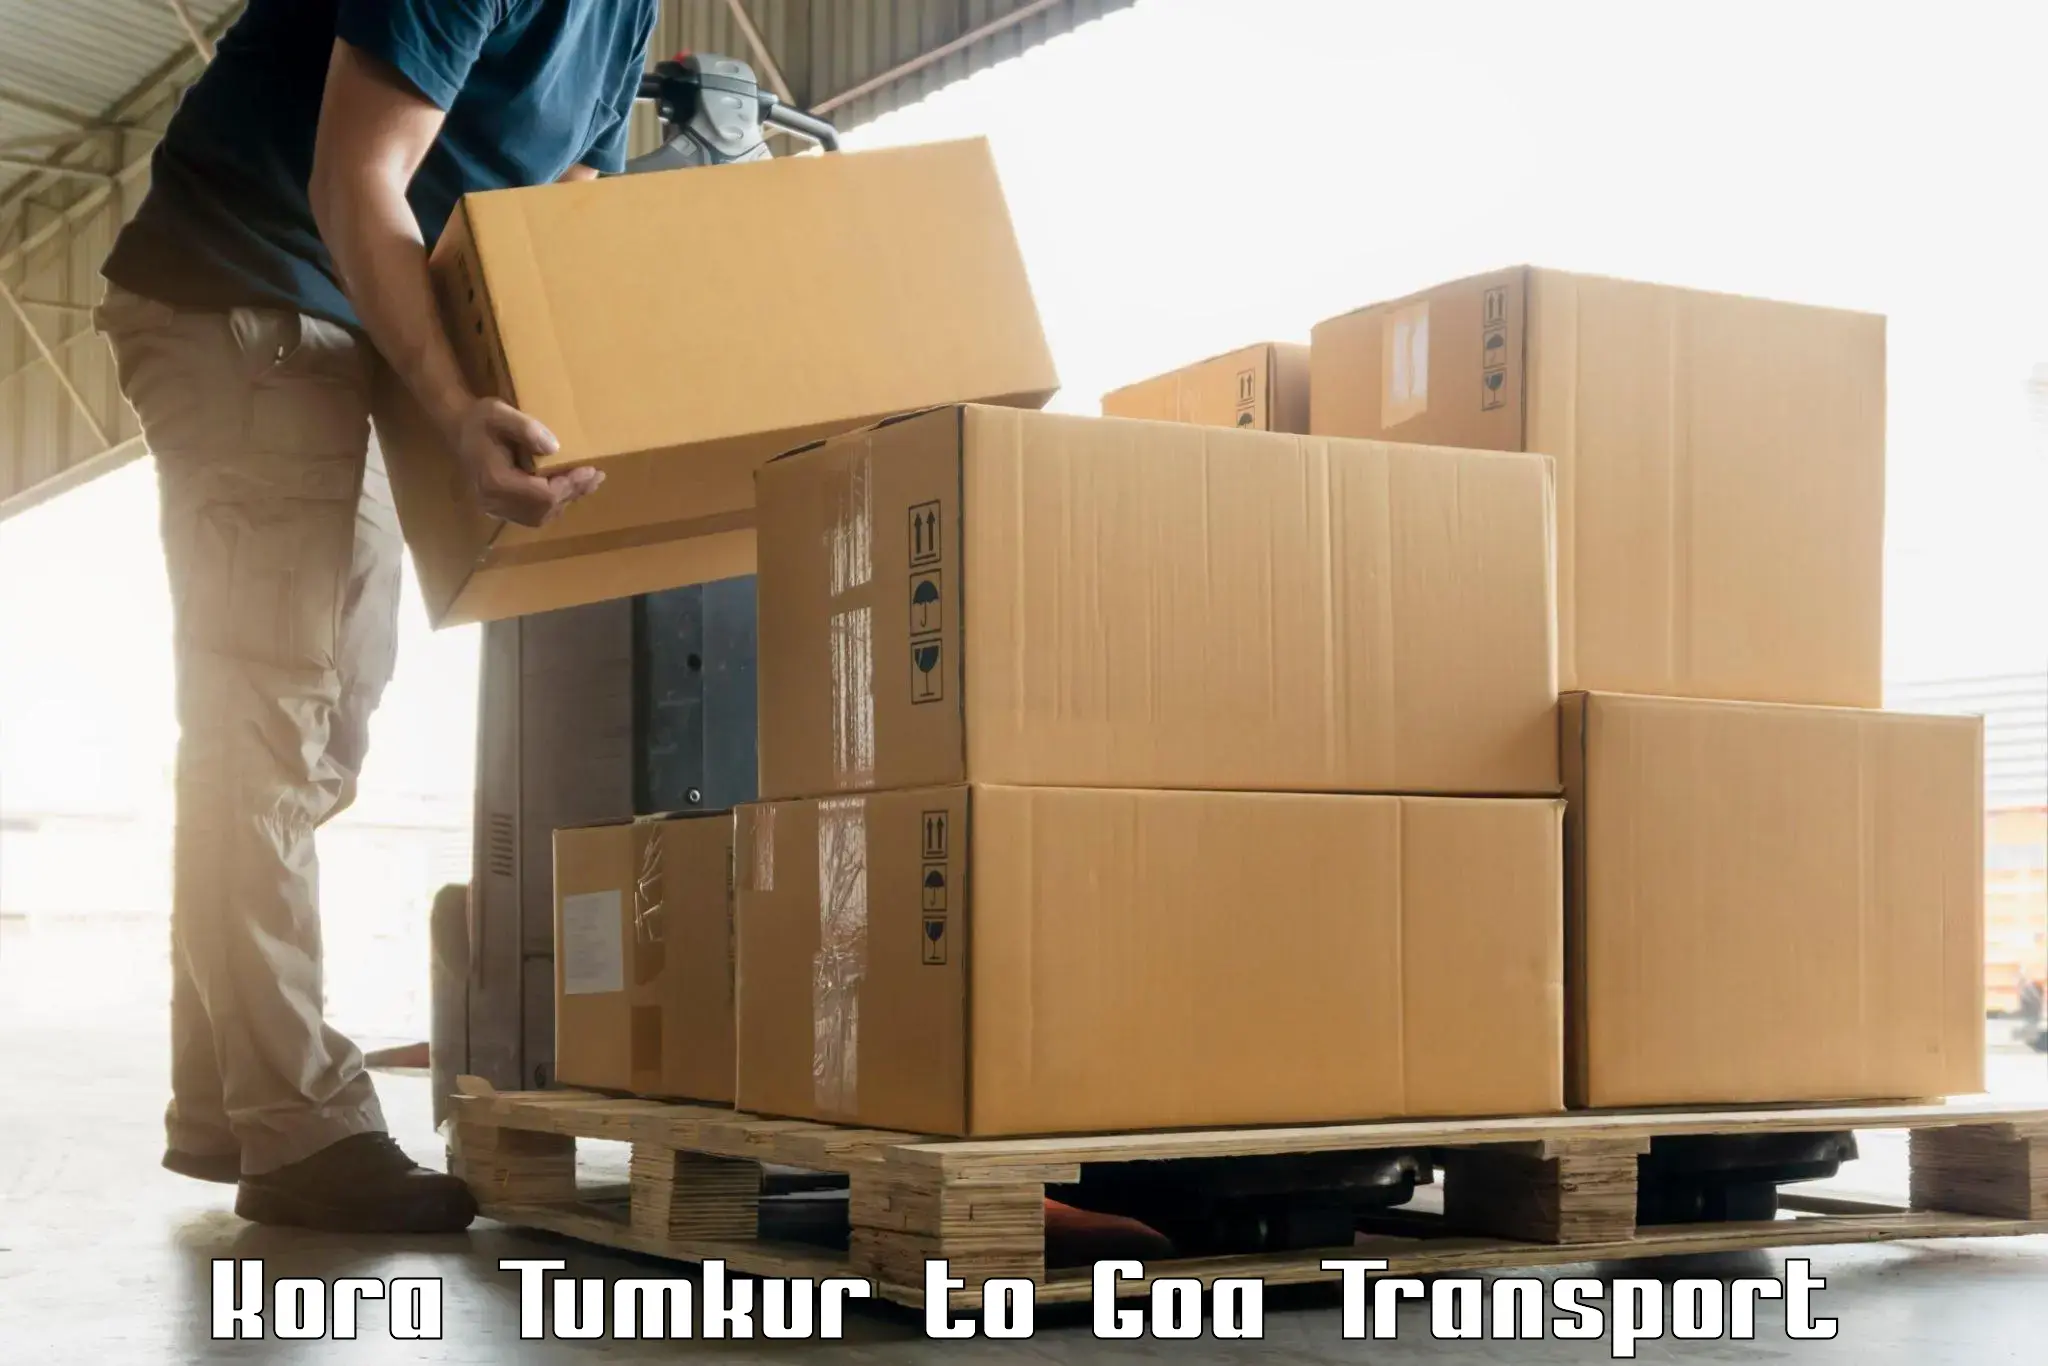 Transport bike from one state to another Kora Tumkur to Vasco da Gama